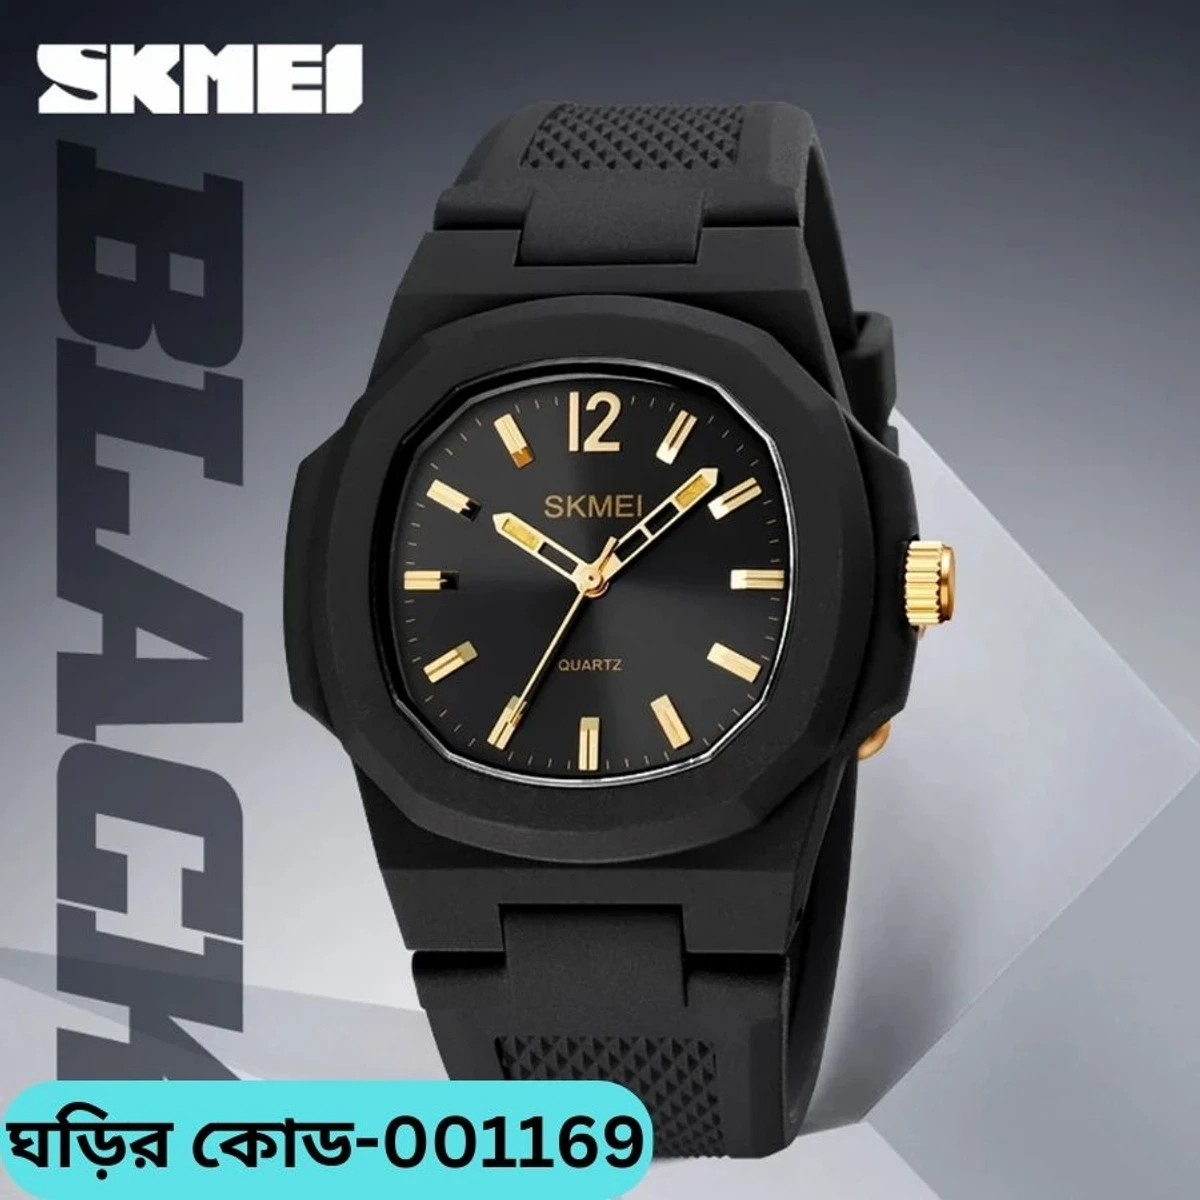 SKMEI Model 1717 Original Watch Retro Silicone Band Casual Analog Quartz Wristwatch 1717 Cool Watches Fashion Waterproof Sport Watch - Model 1717  skmei  Cooler black or golden dial